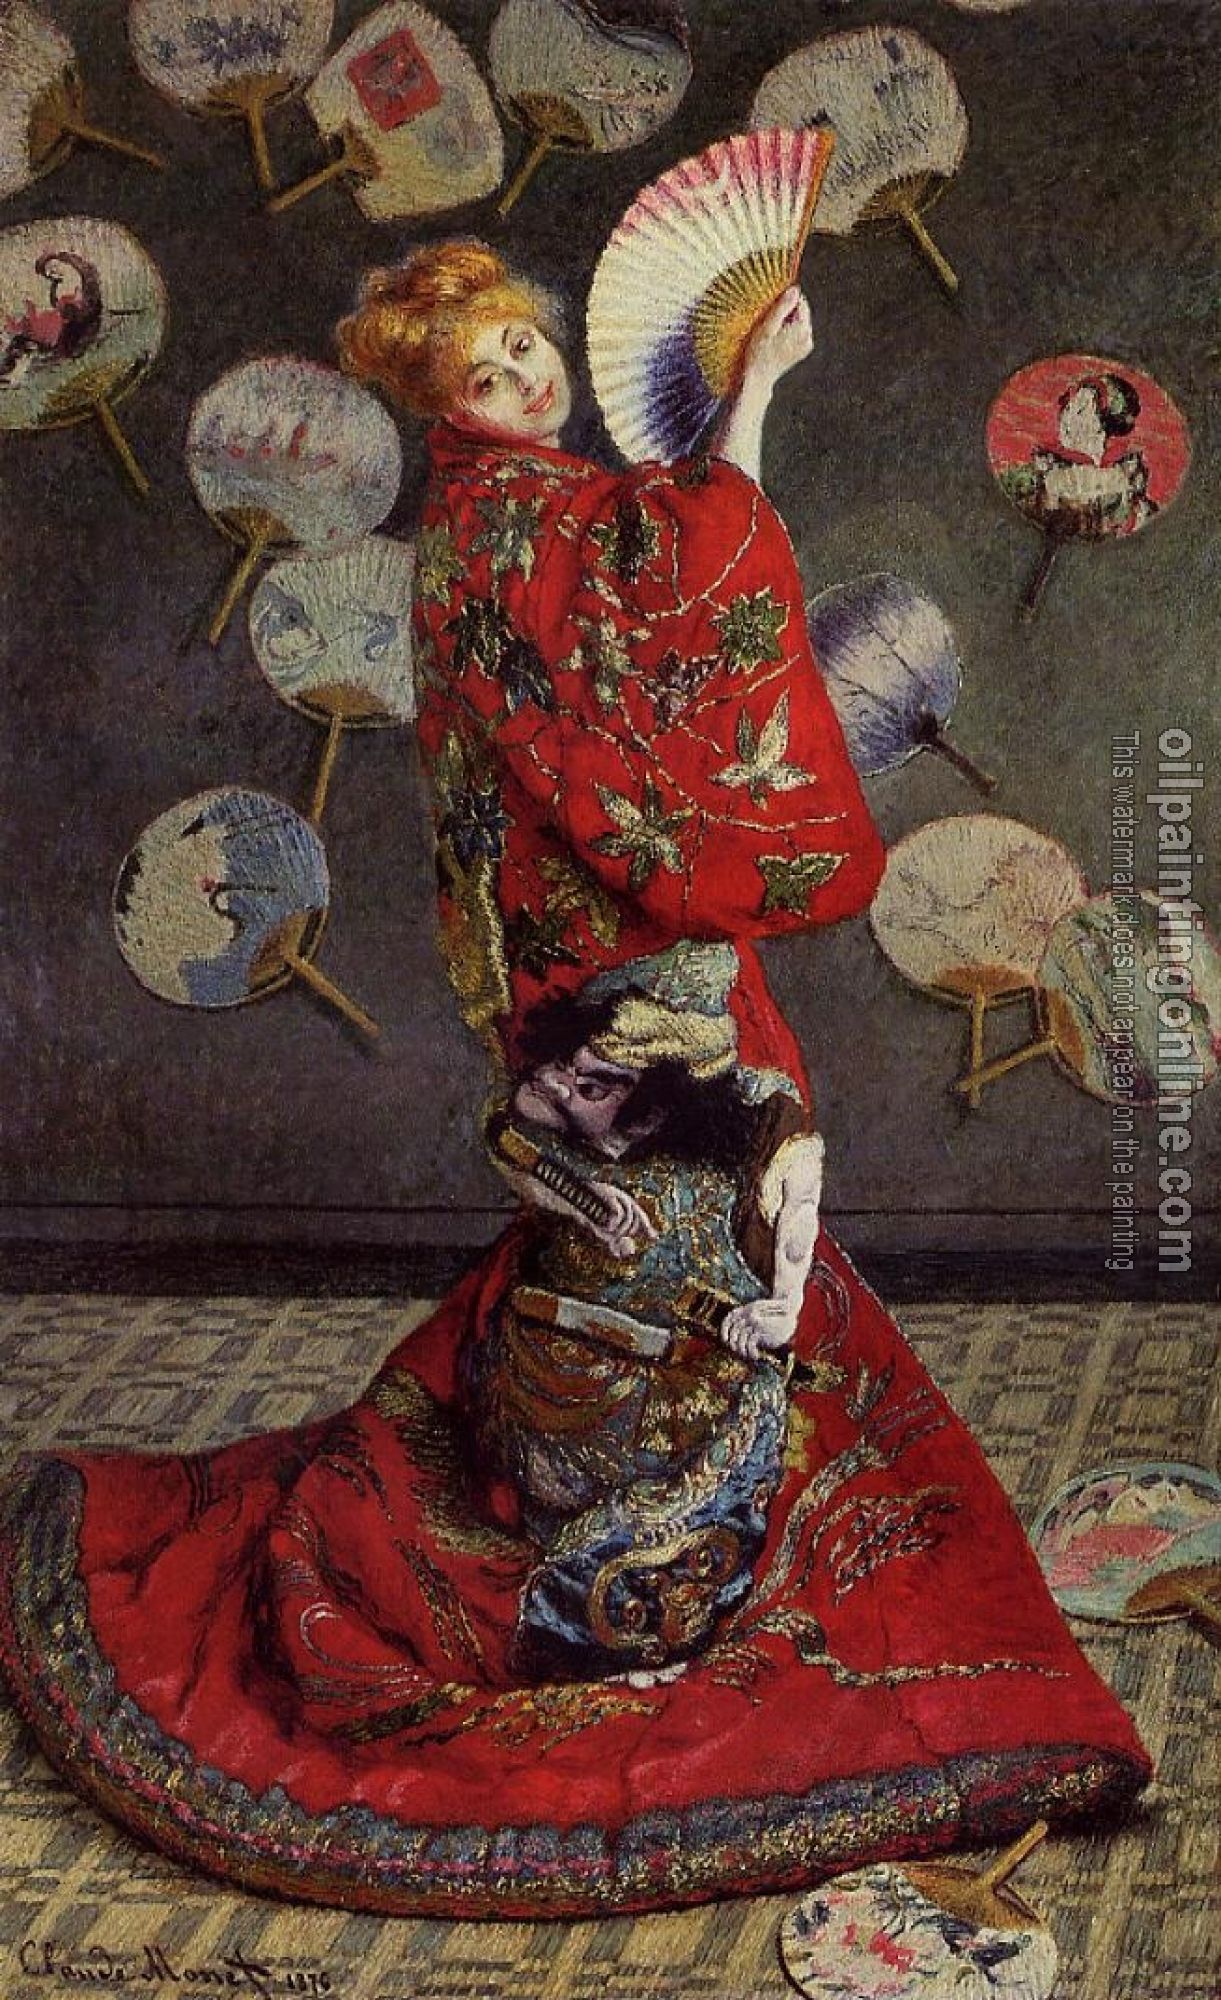 Monet, Claude Oscar - Camille Monet in Japanese Costume